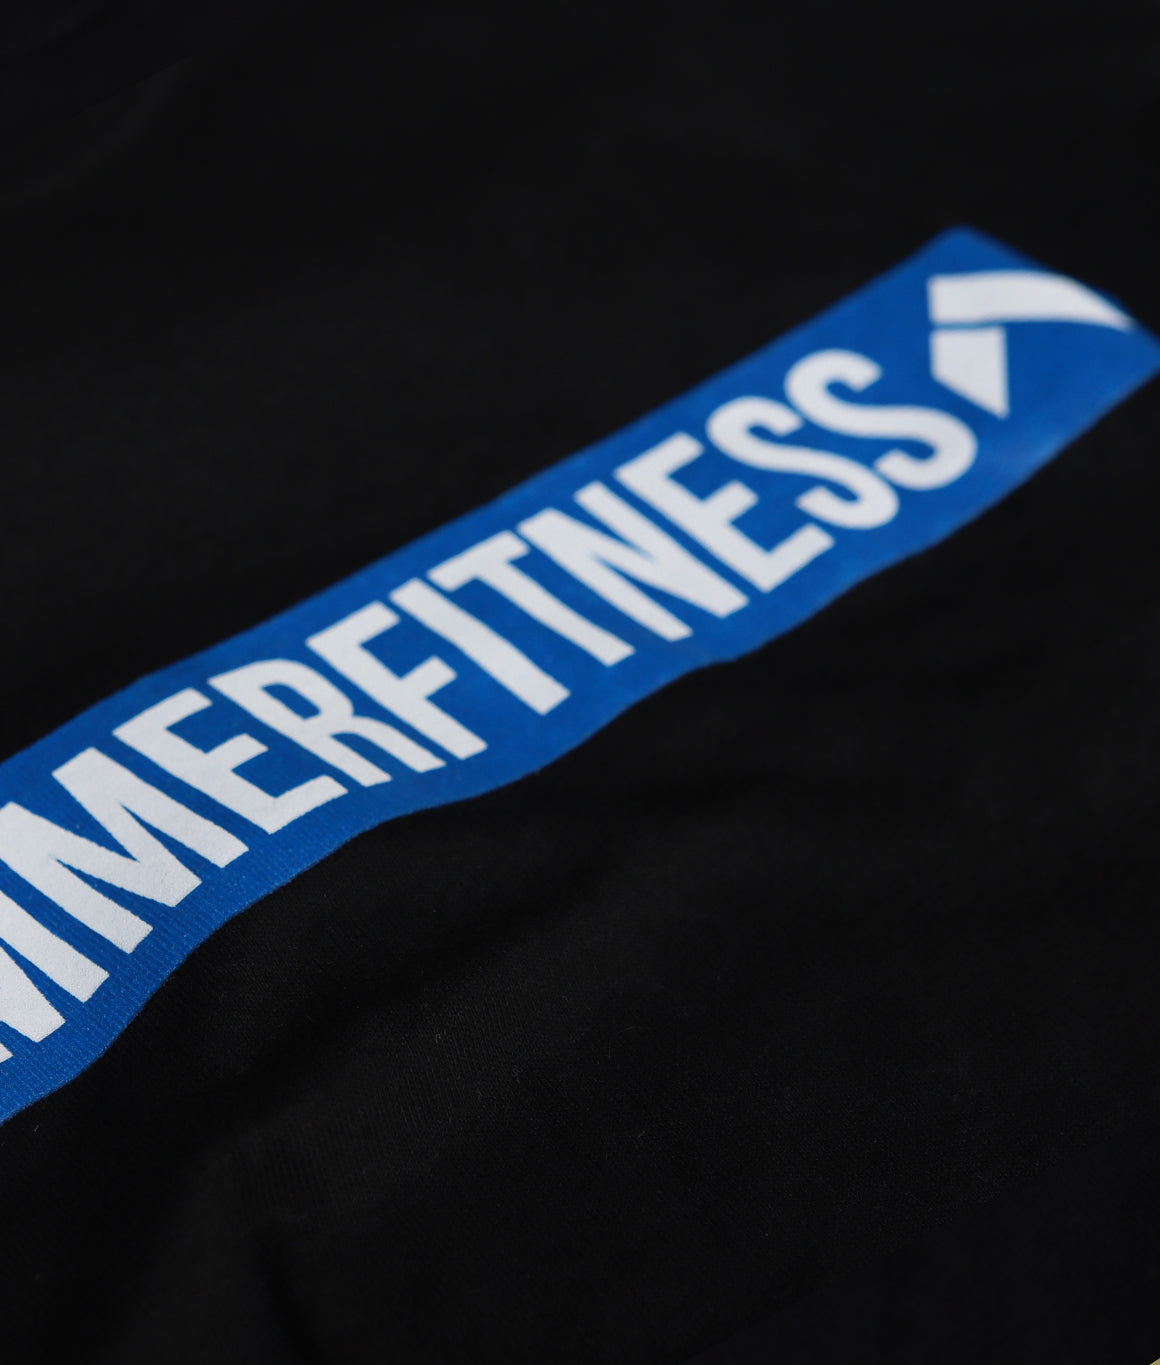 Box Logo Hammer Fitness T Shirt [black/blue]